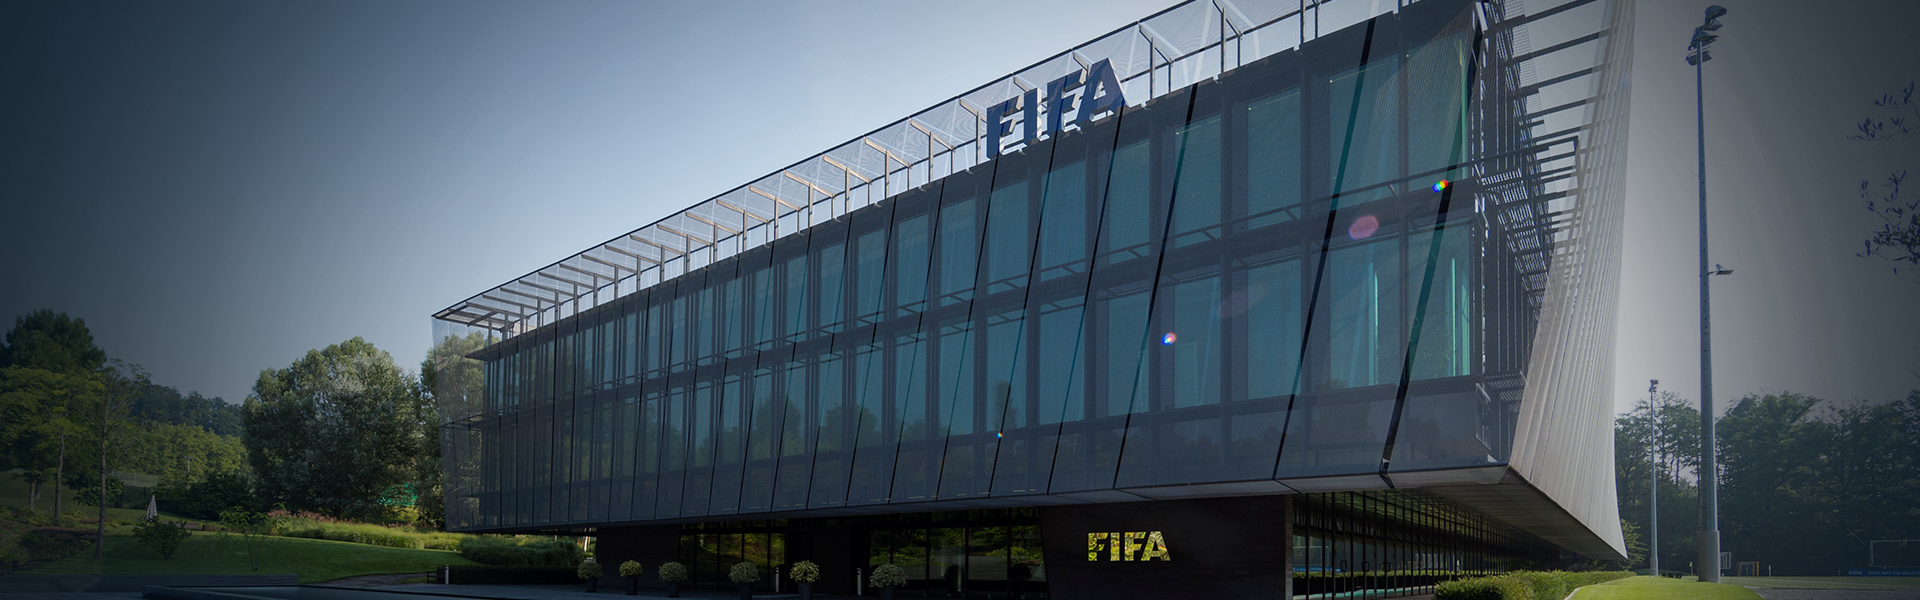 Banner image - FIFA